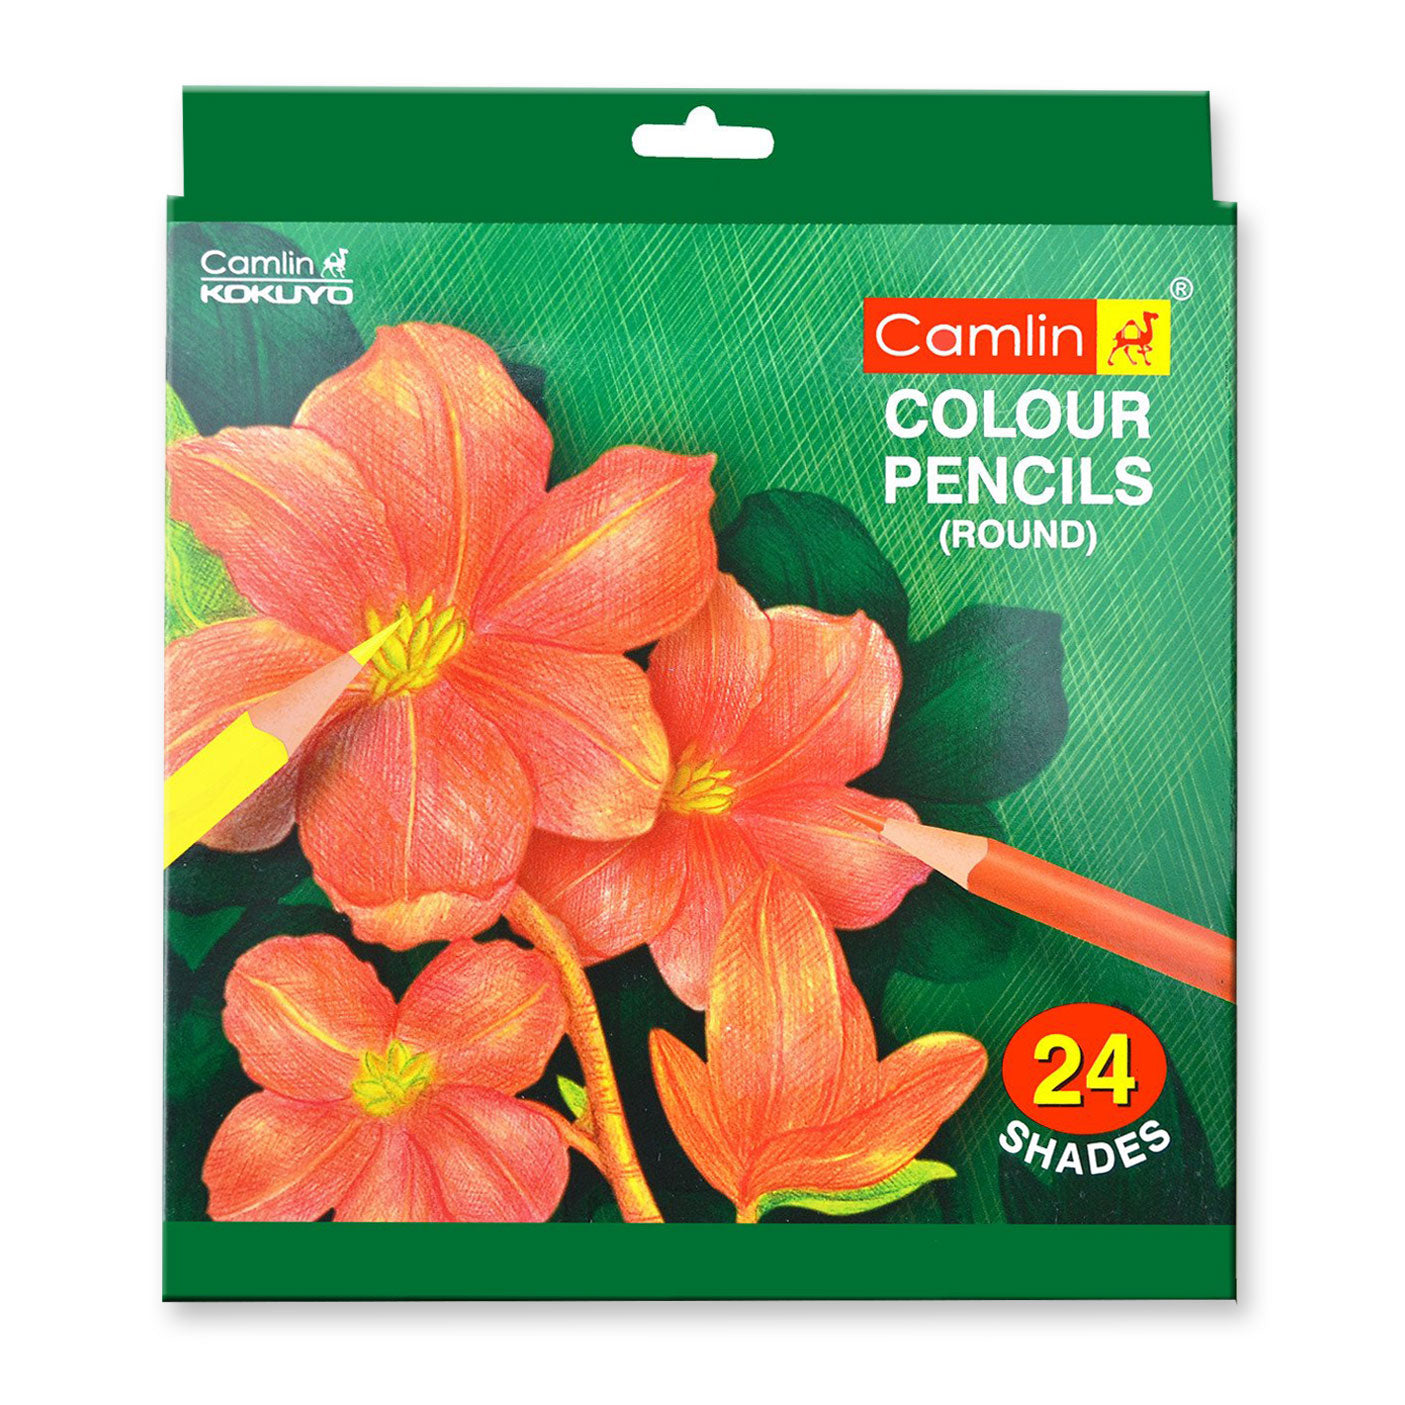 Camlin Colouring Pencils 24 Shades